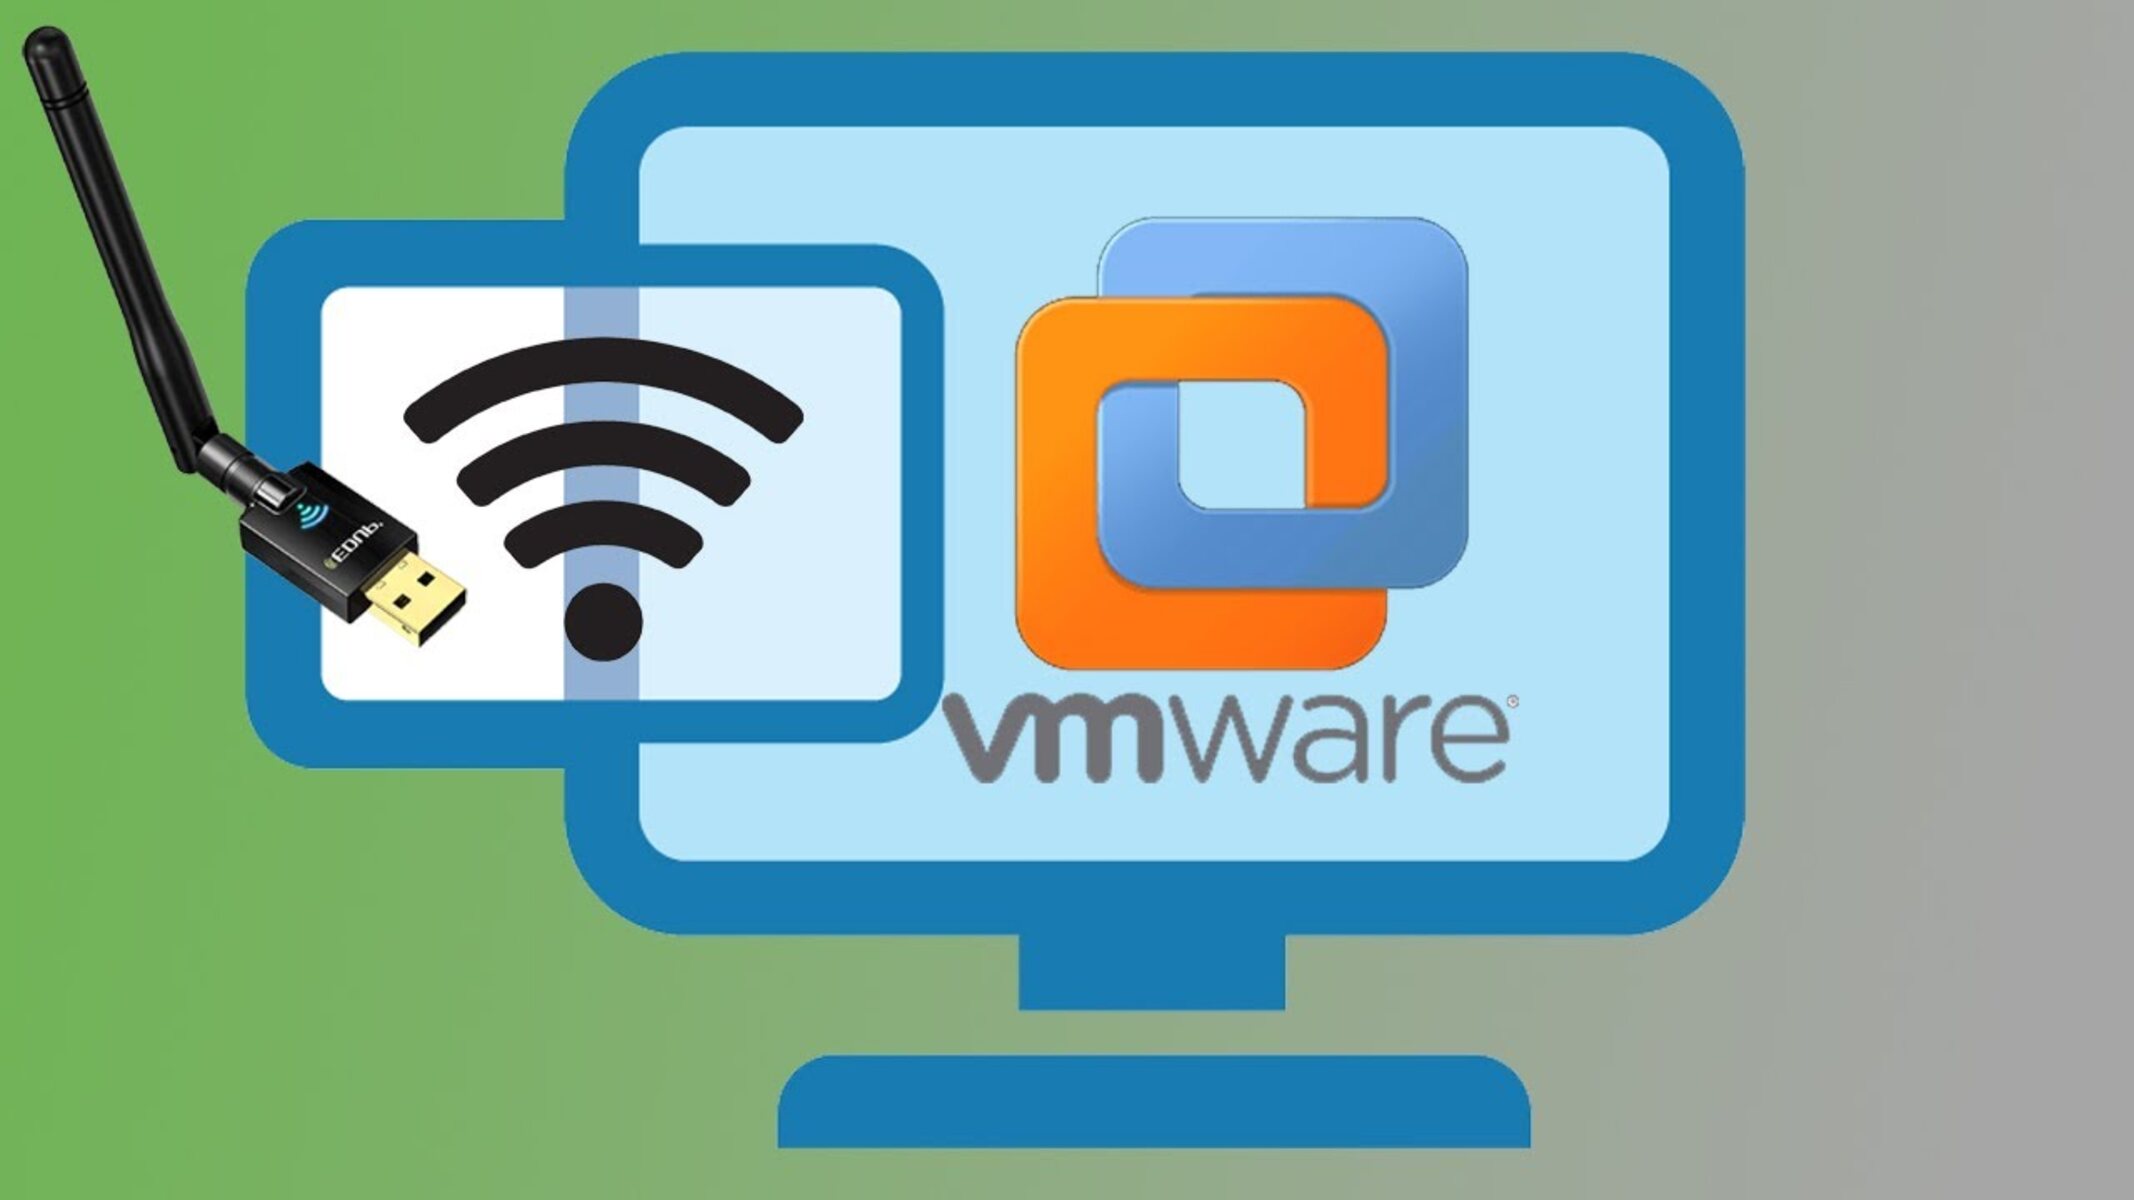 How To Enable Wireless Internet On Ubuntu In VMware Workstation